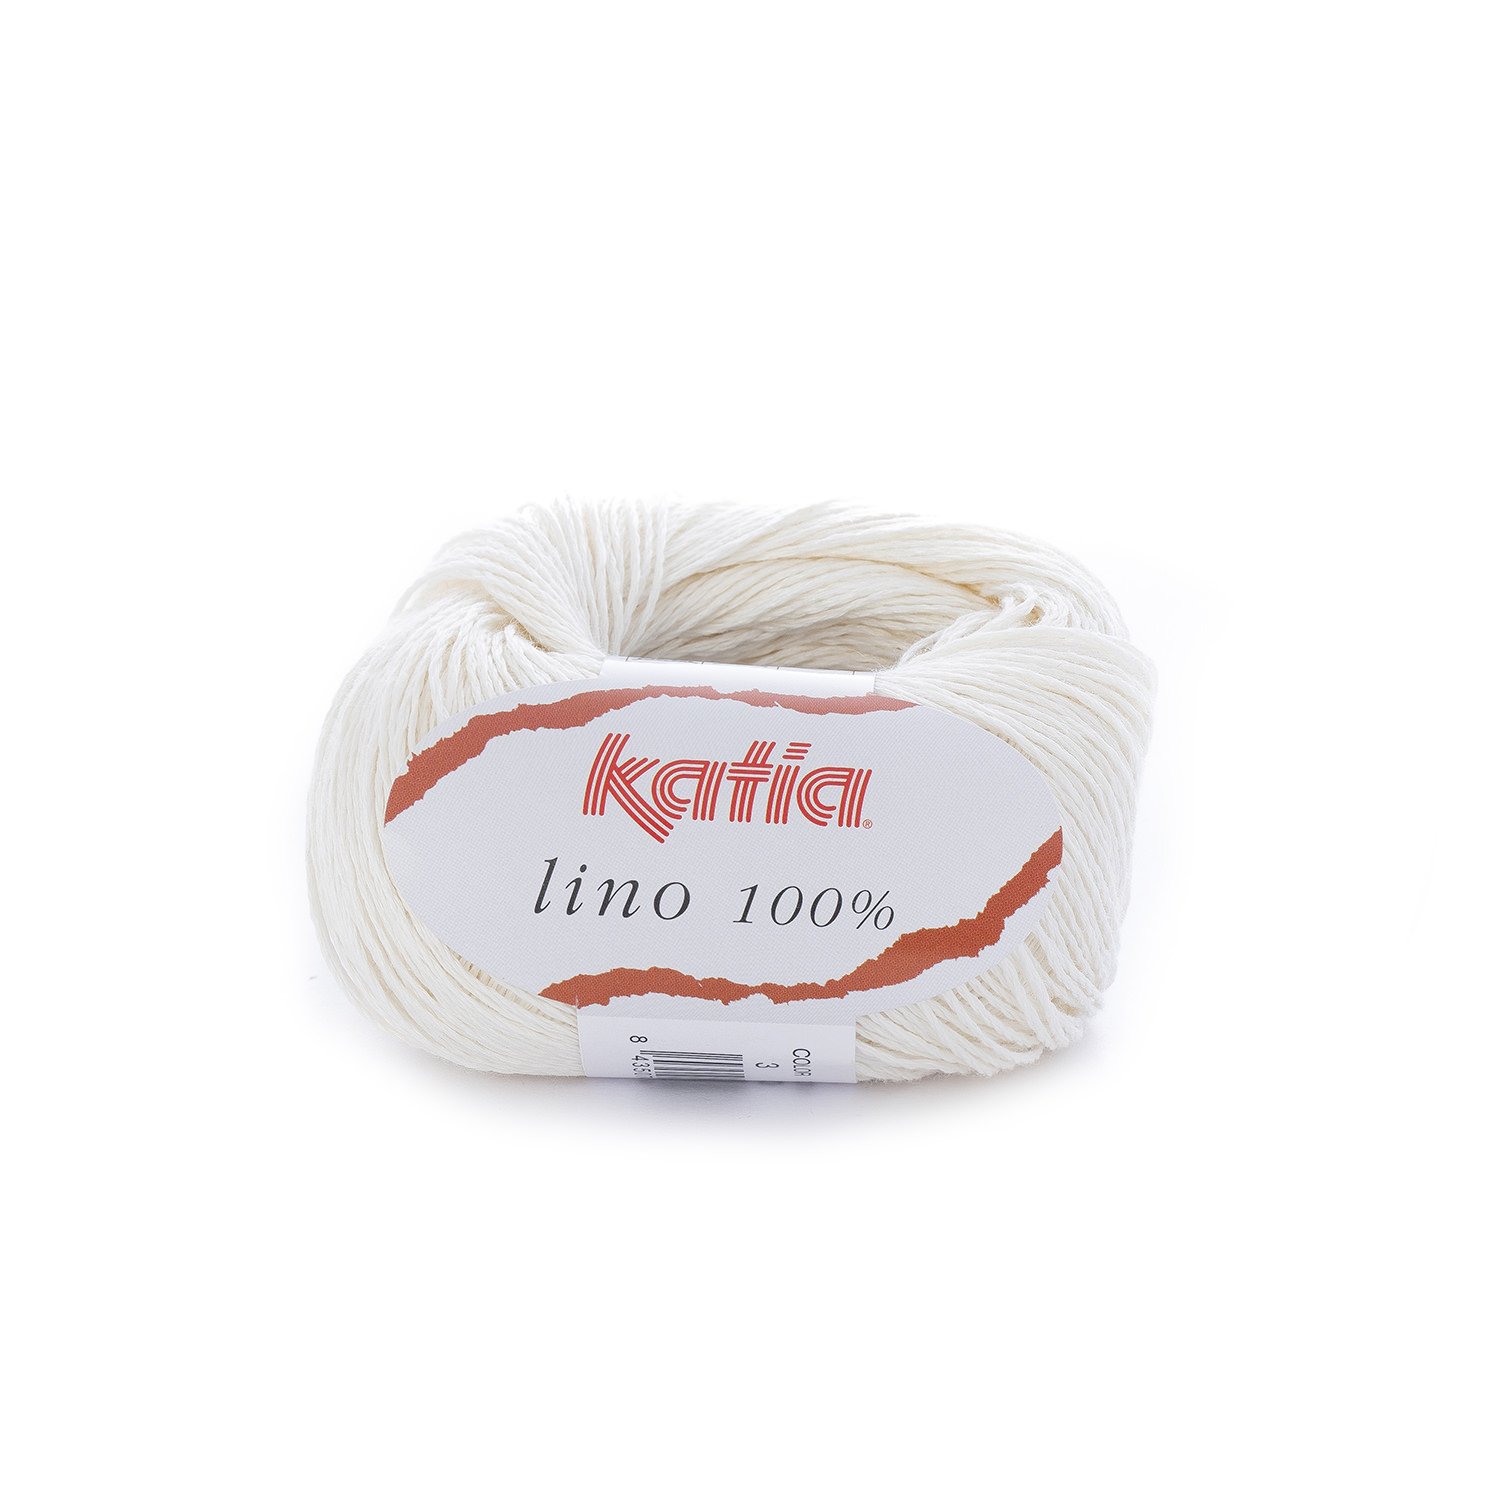 Buy KATIA LINO 100% From KATIA Online | Yarnstreet.com